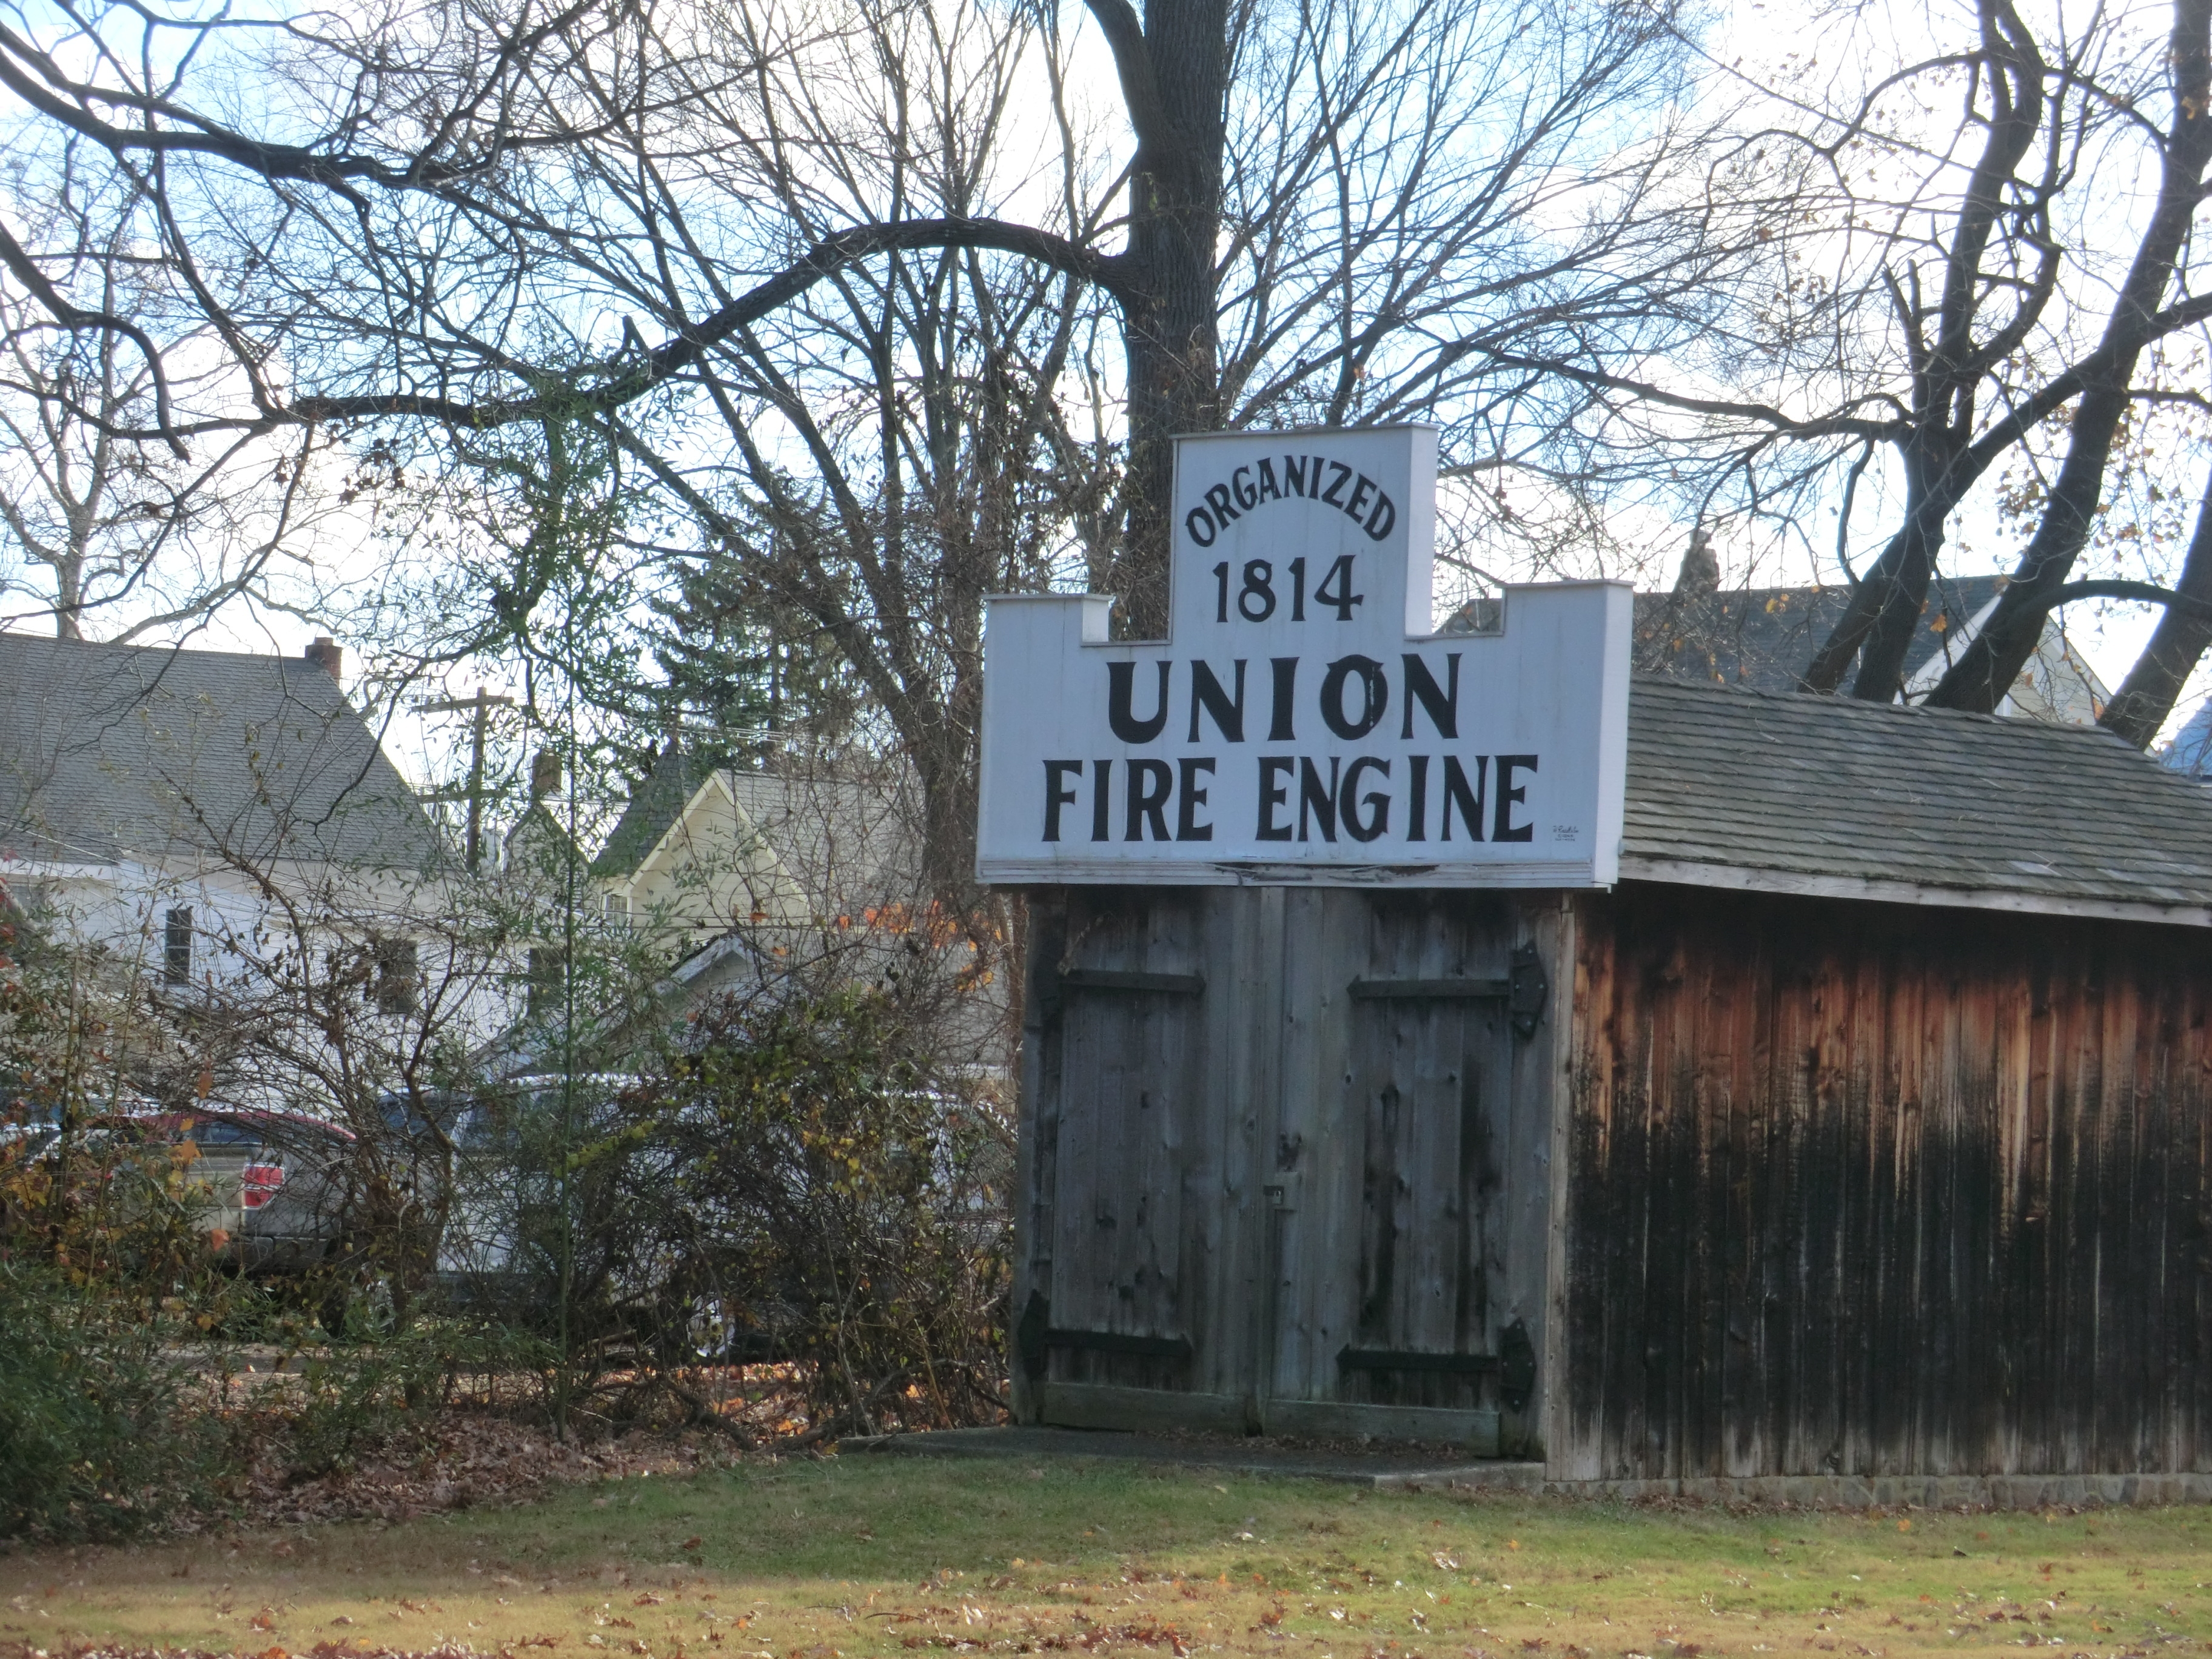 Union Fire Engine-organized 1814